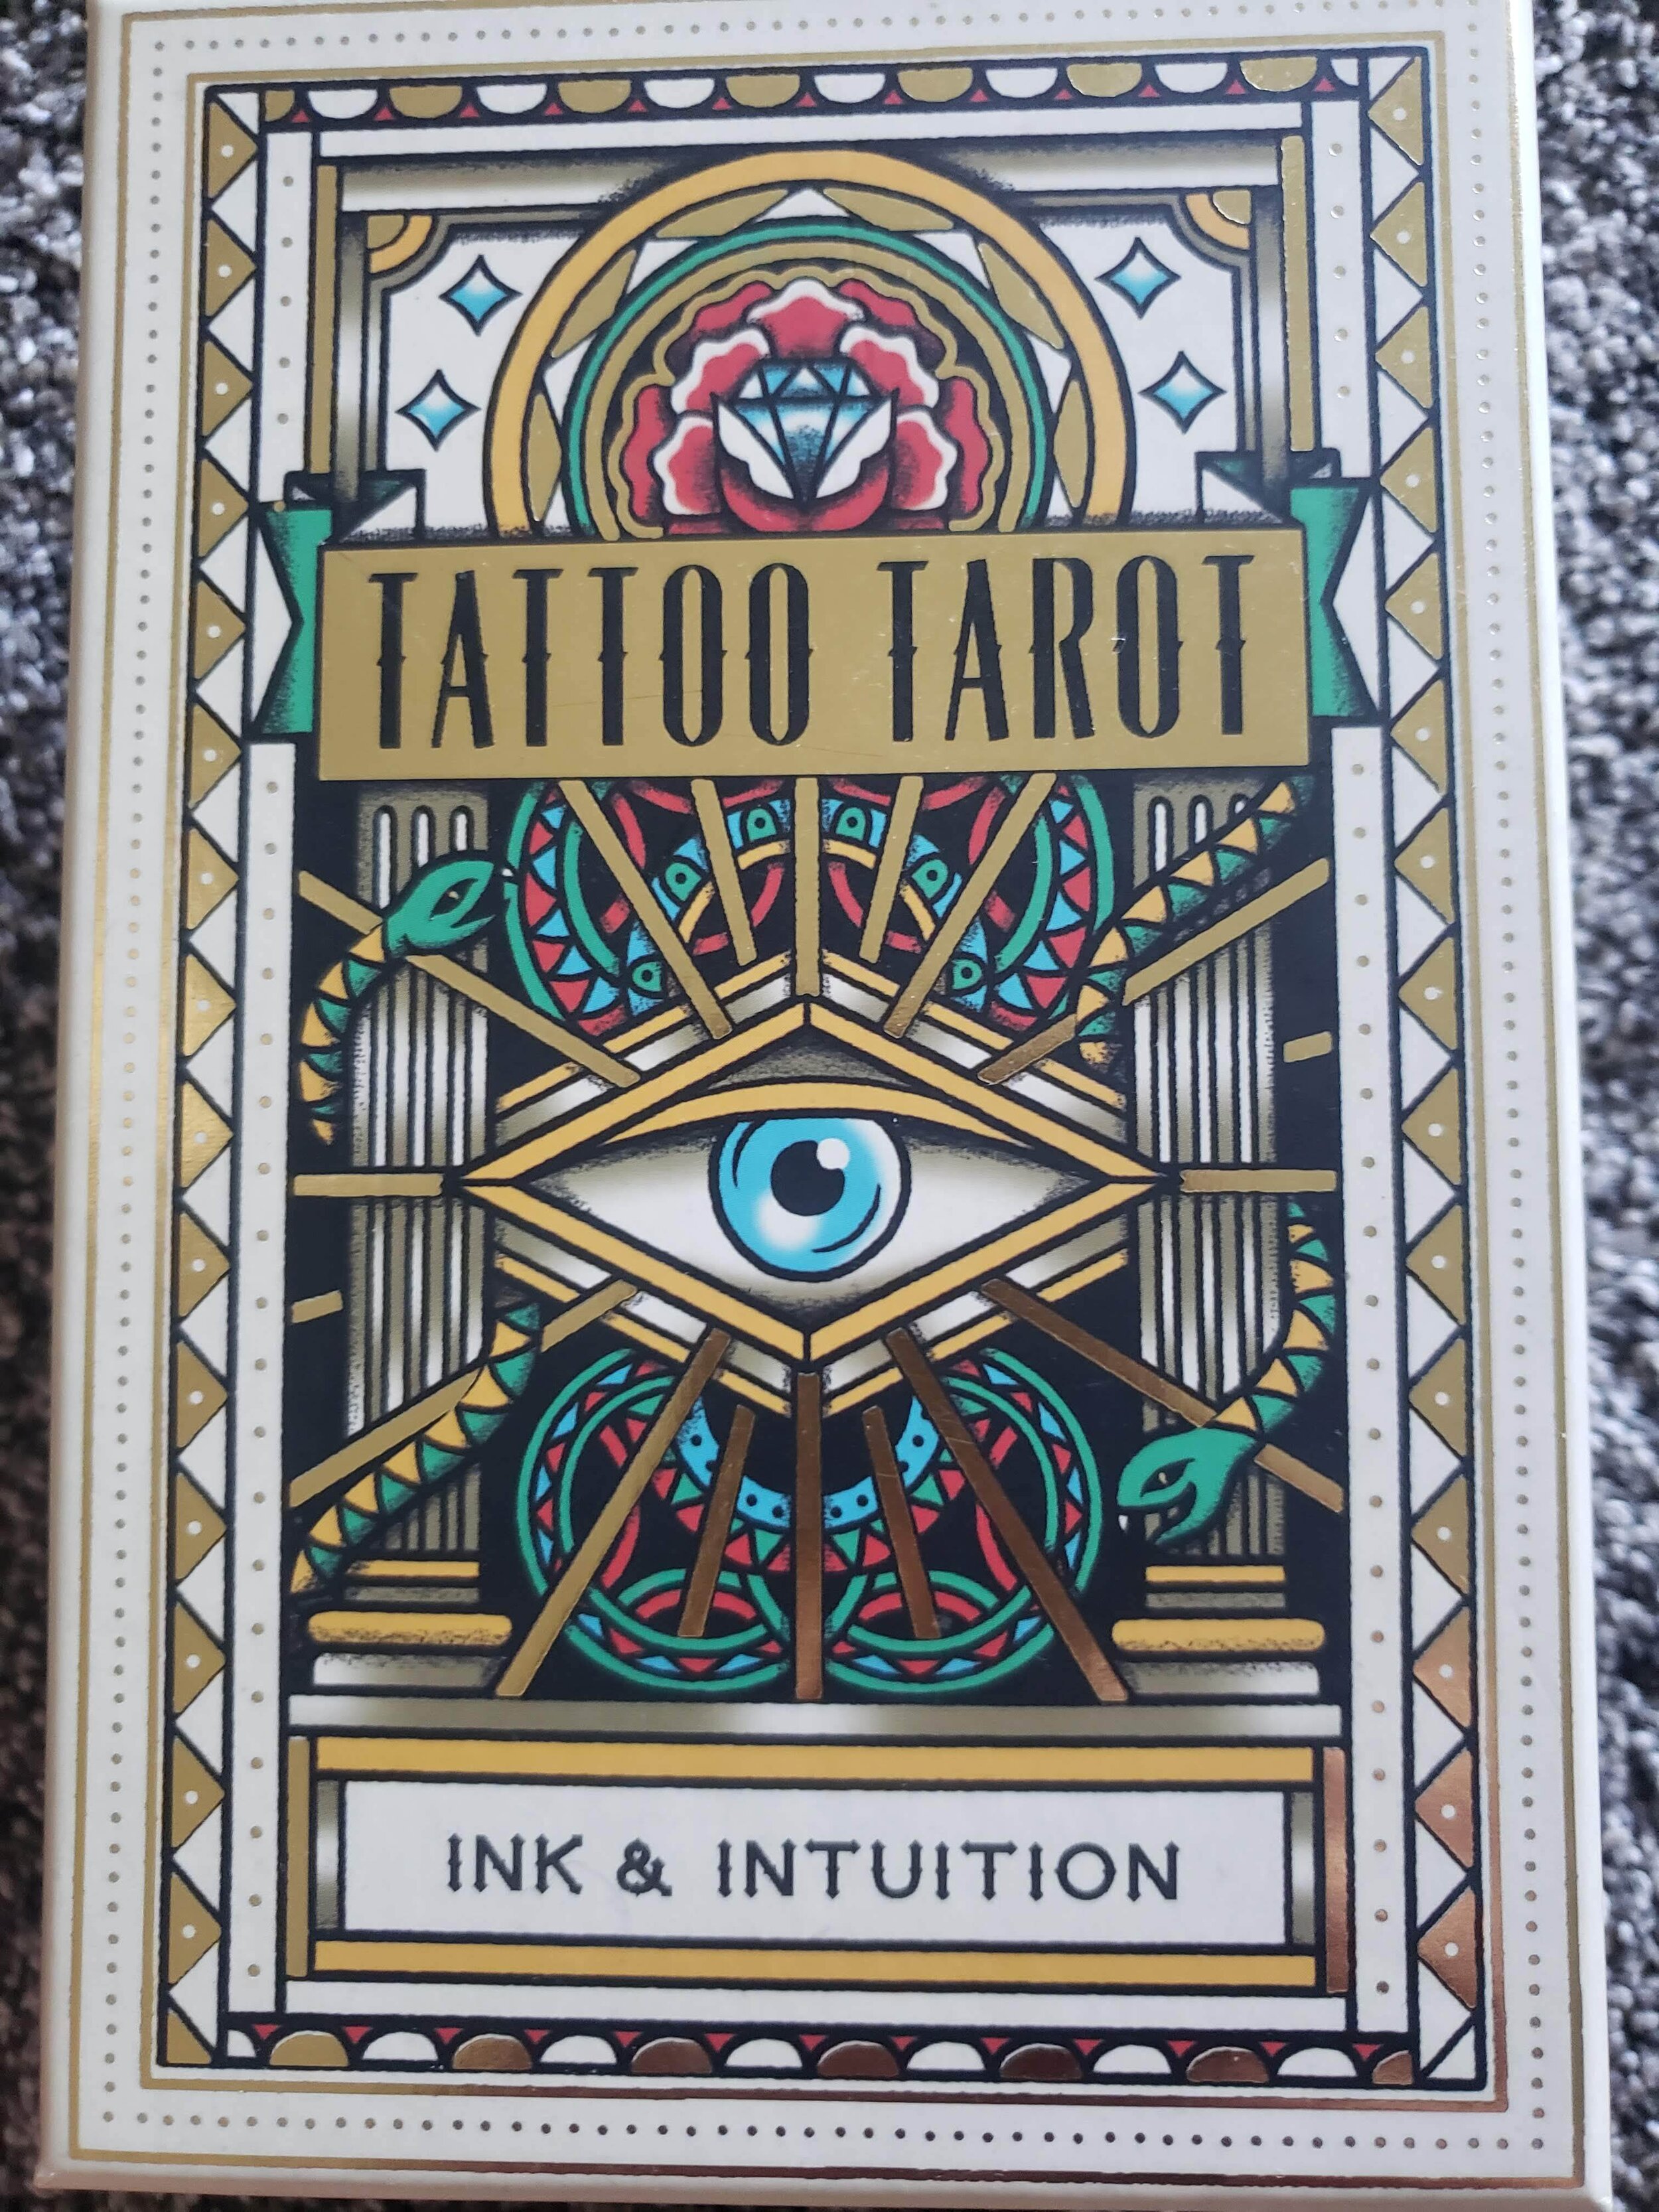 Tattoo Tarot Ink  Intuition  McMahonCollis Diana MEGAMUNDEN  Amazoncouk Books